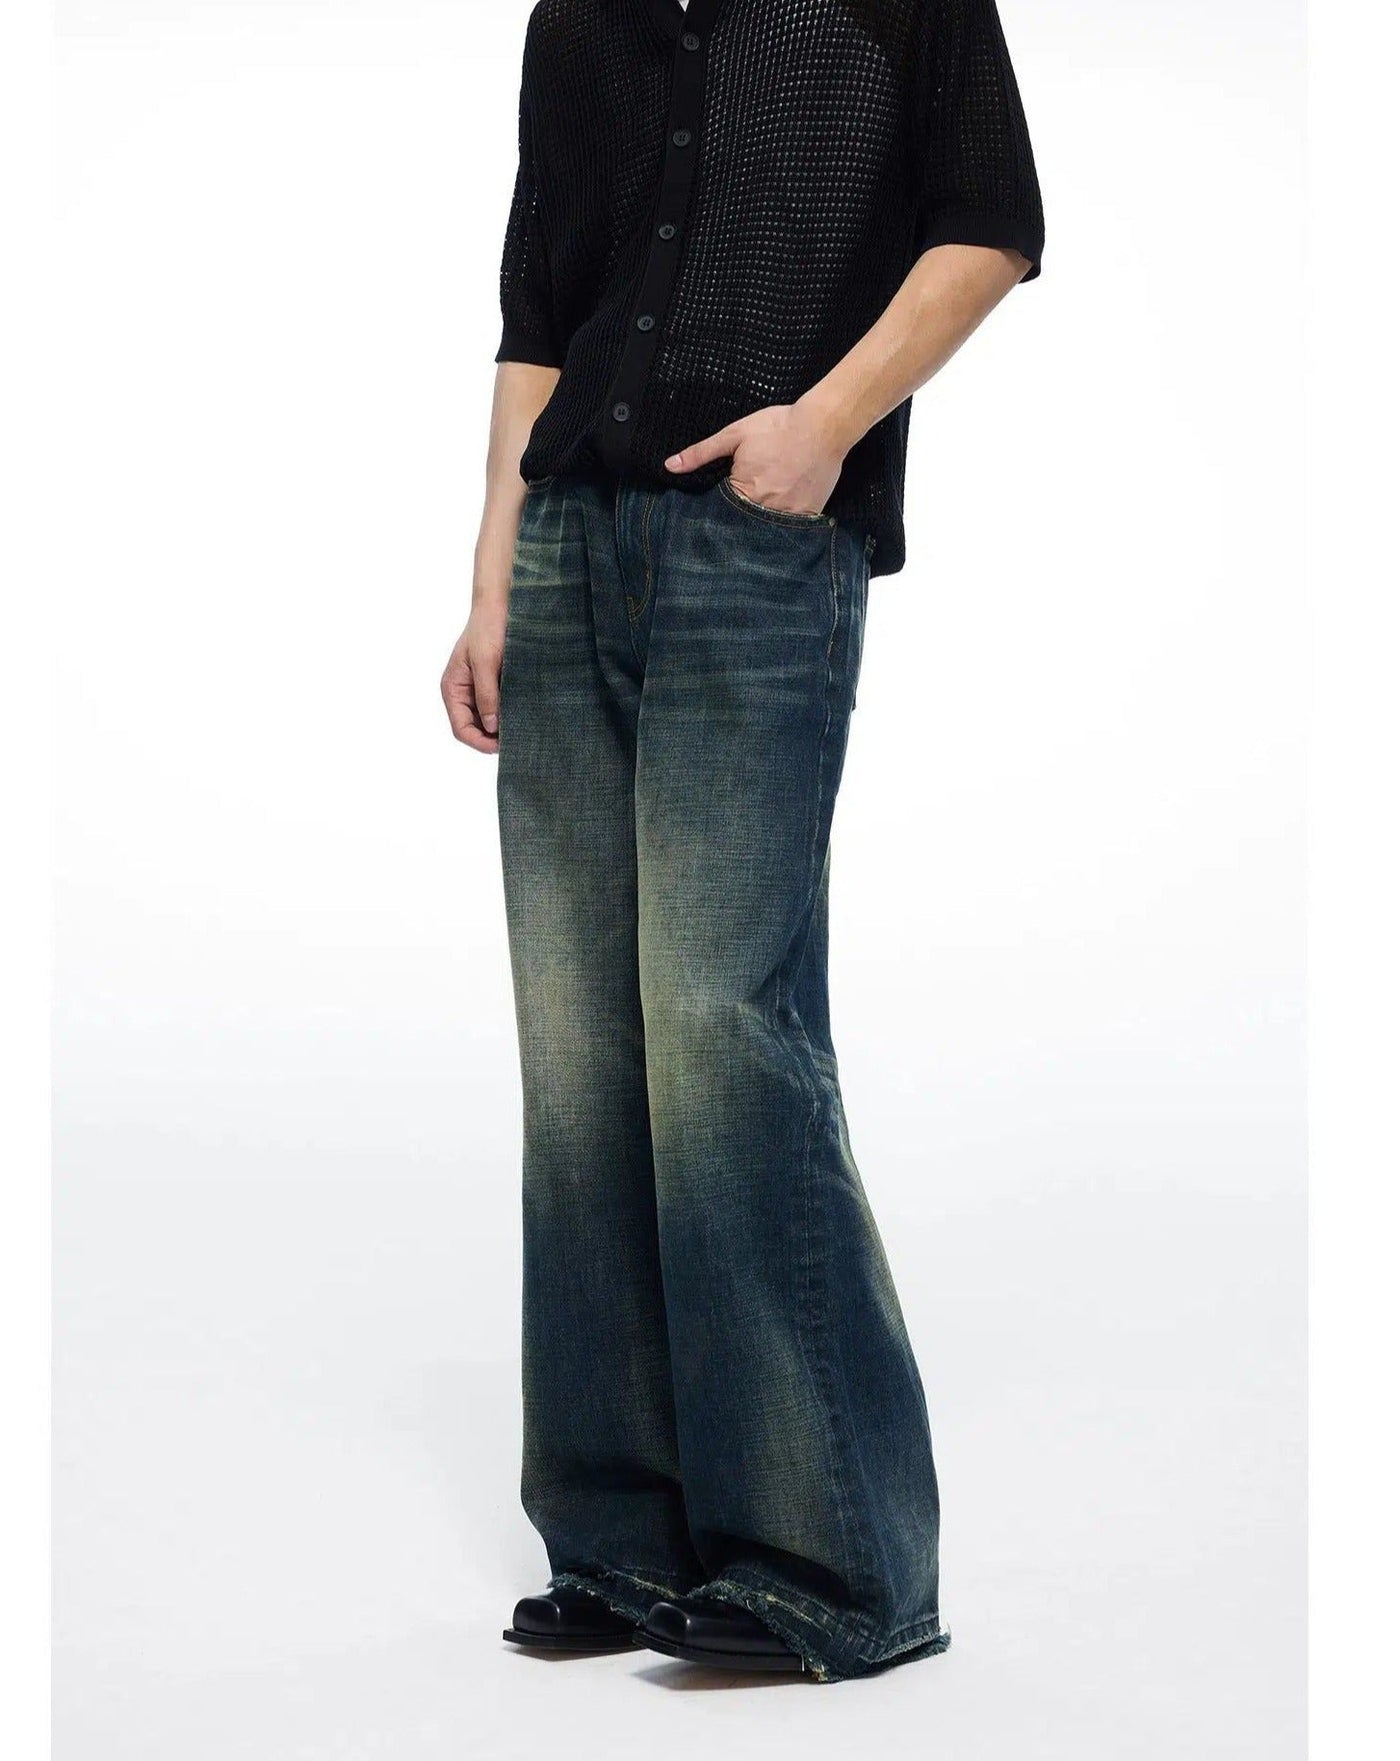 Frayed Ends Washed Jeans Korean Street Fashion Jeans By Terra Incognita Shop Online at OH Vault